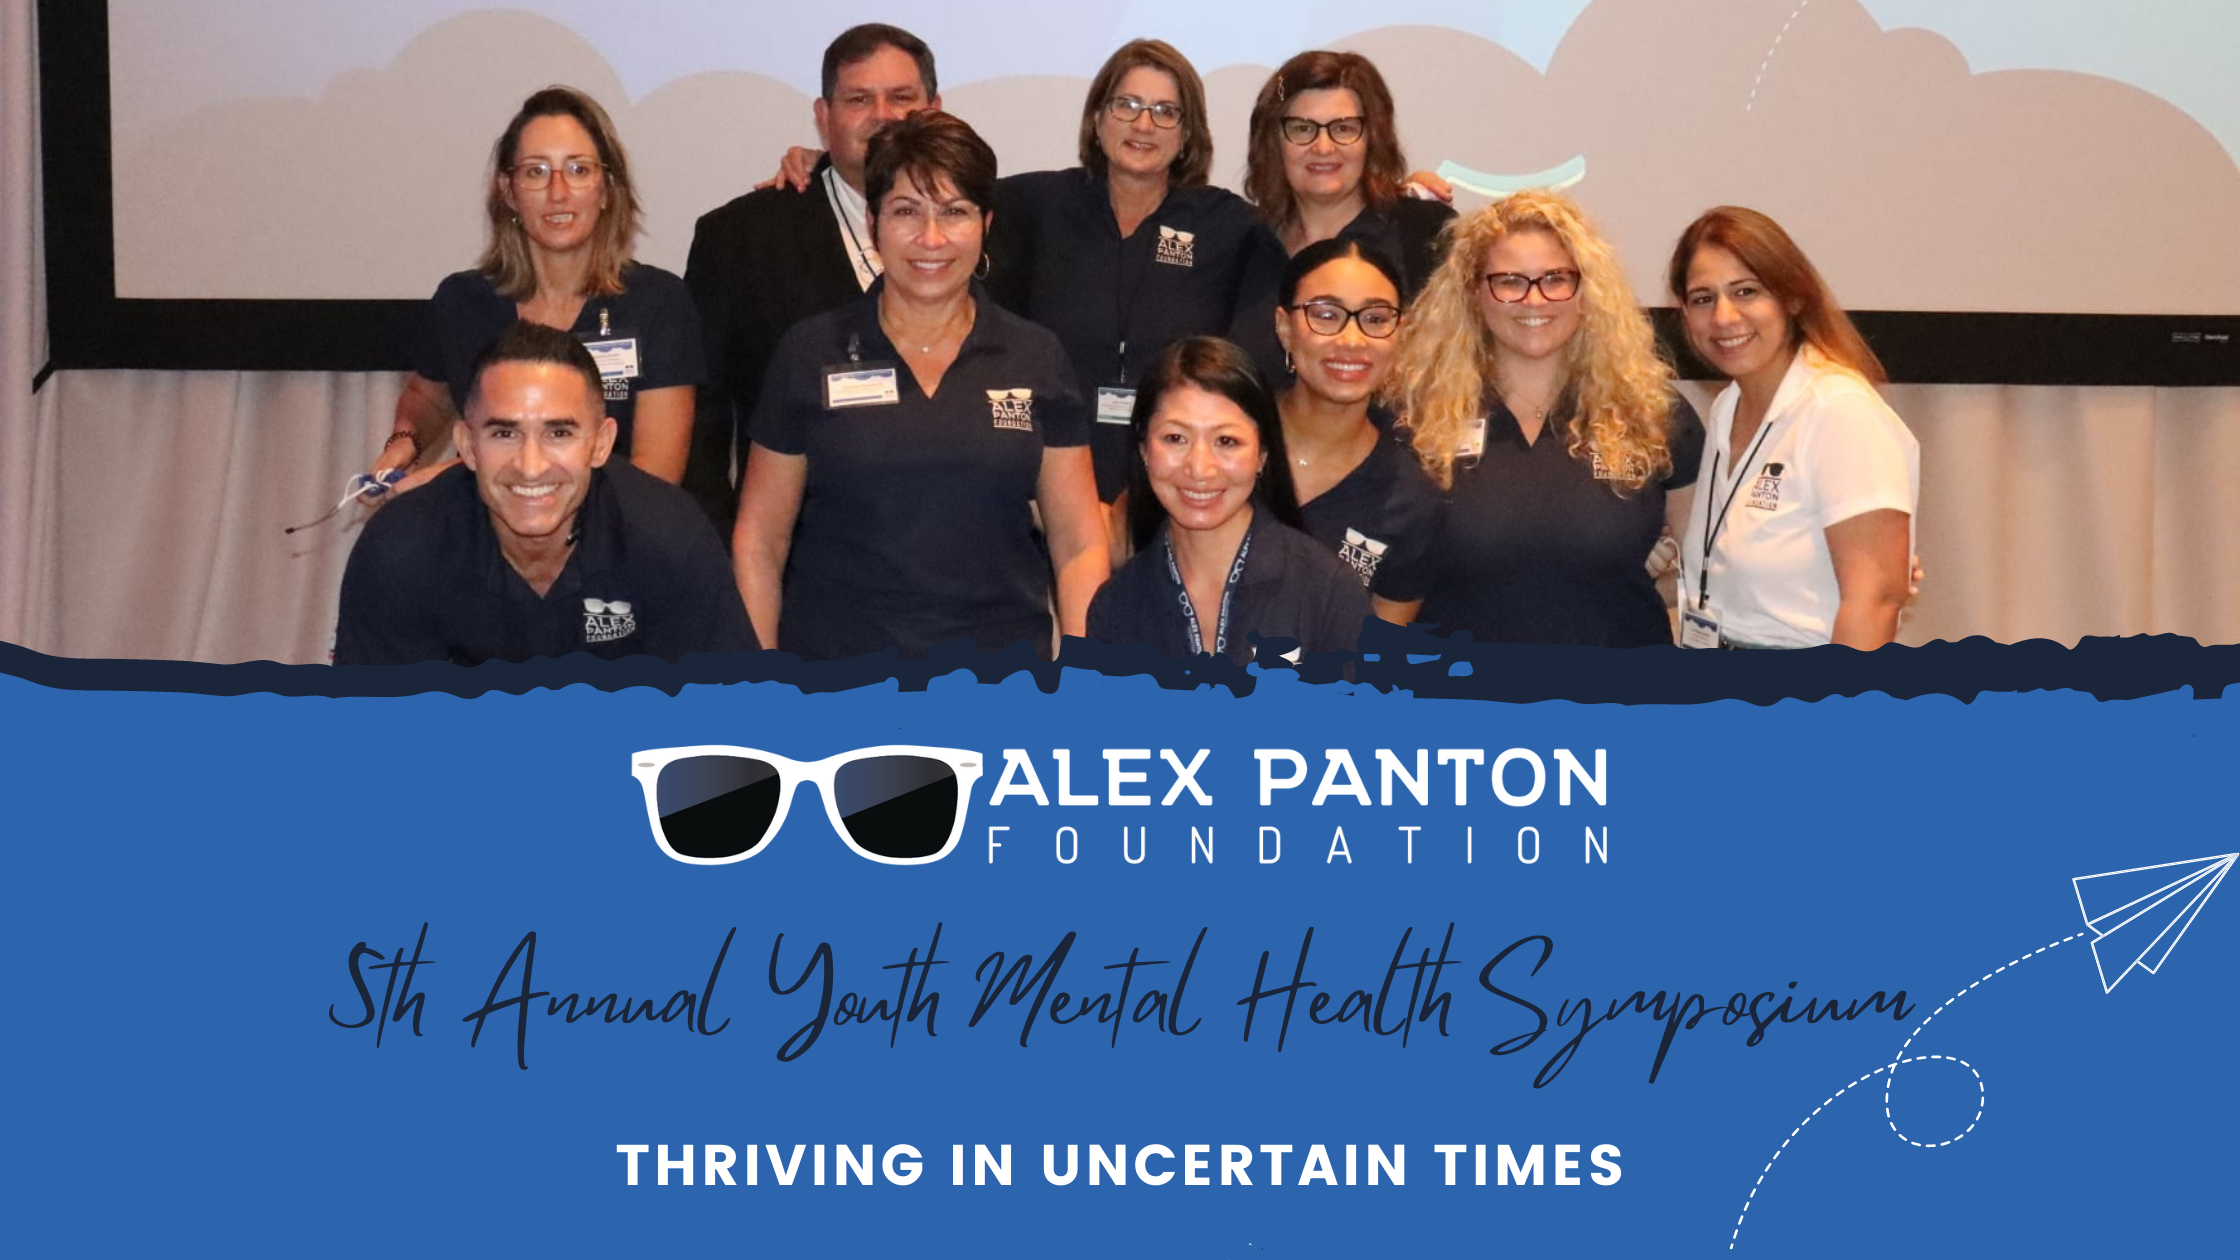 5th Annual Youth Mental Health Symposium Recap